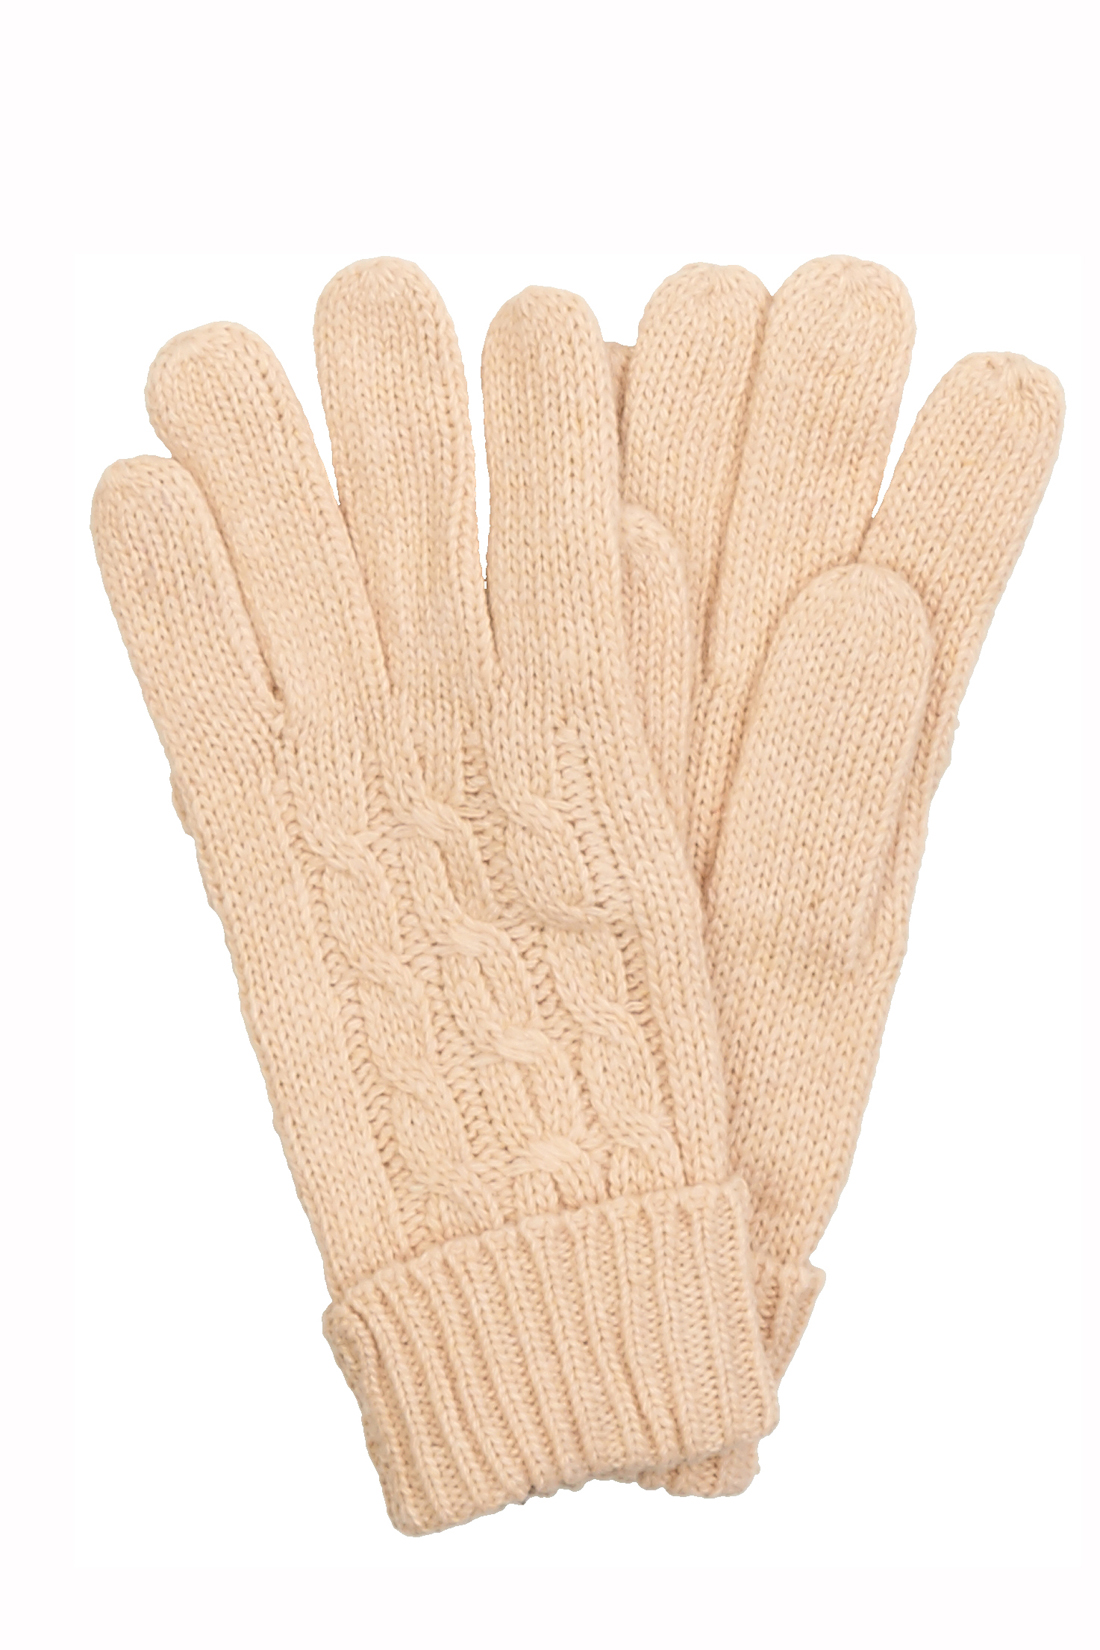 Перчатки с косами (арт. baon B368507), размер Без/раз, цвет ashwood melange#бежевый